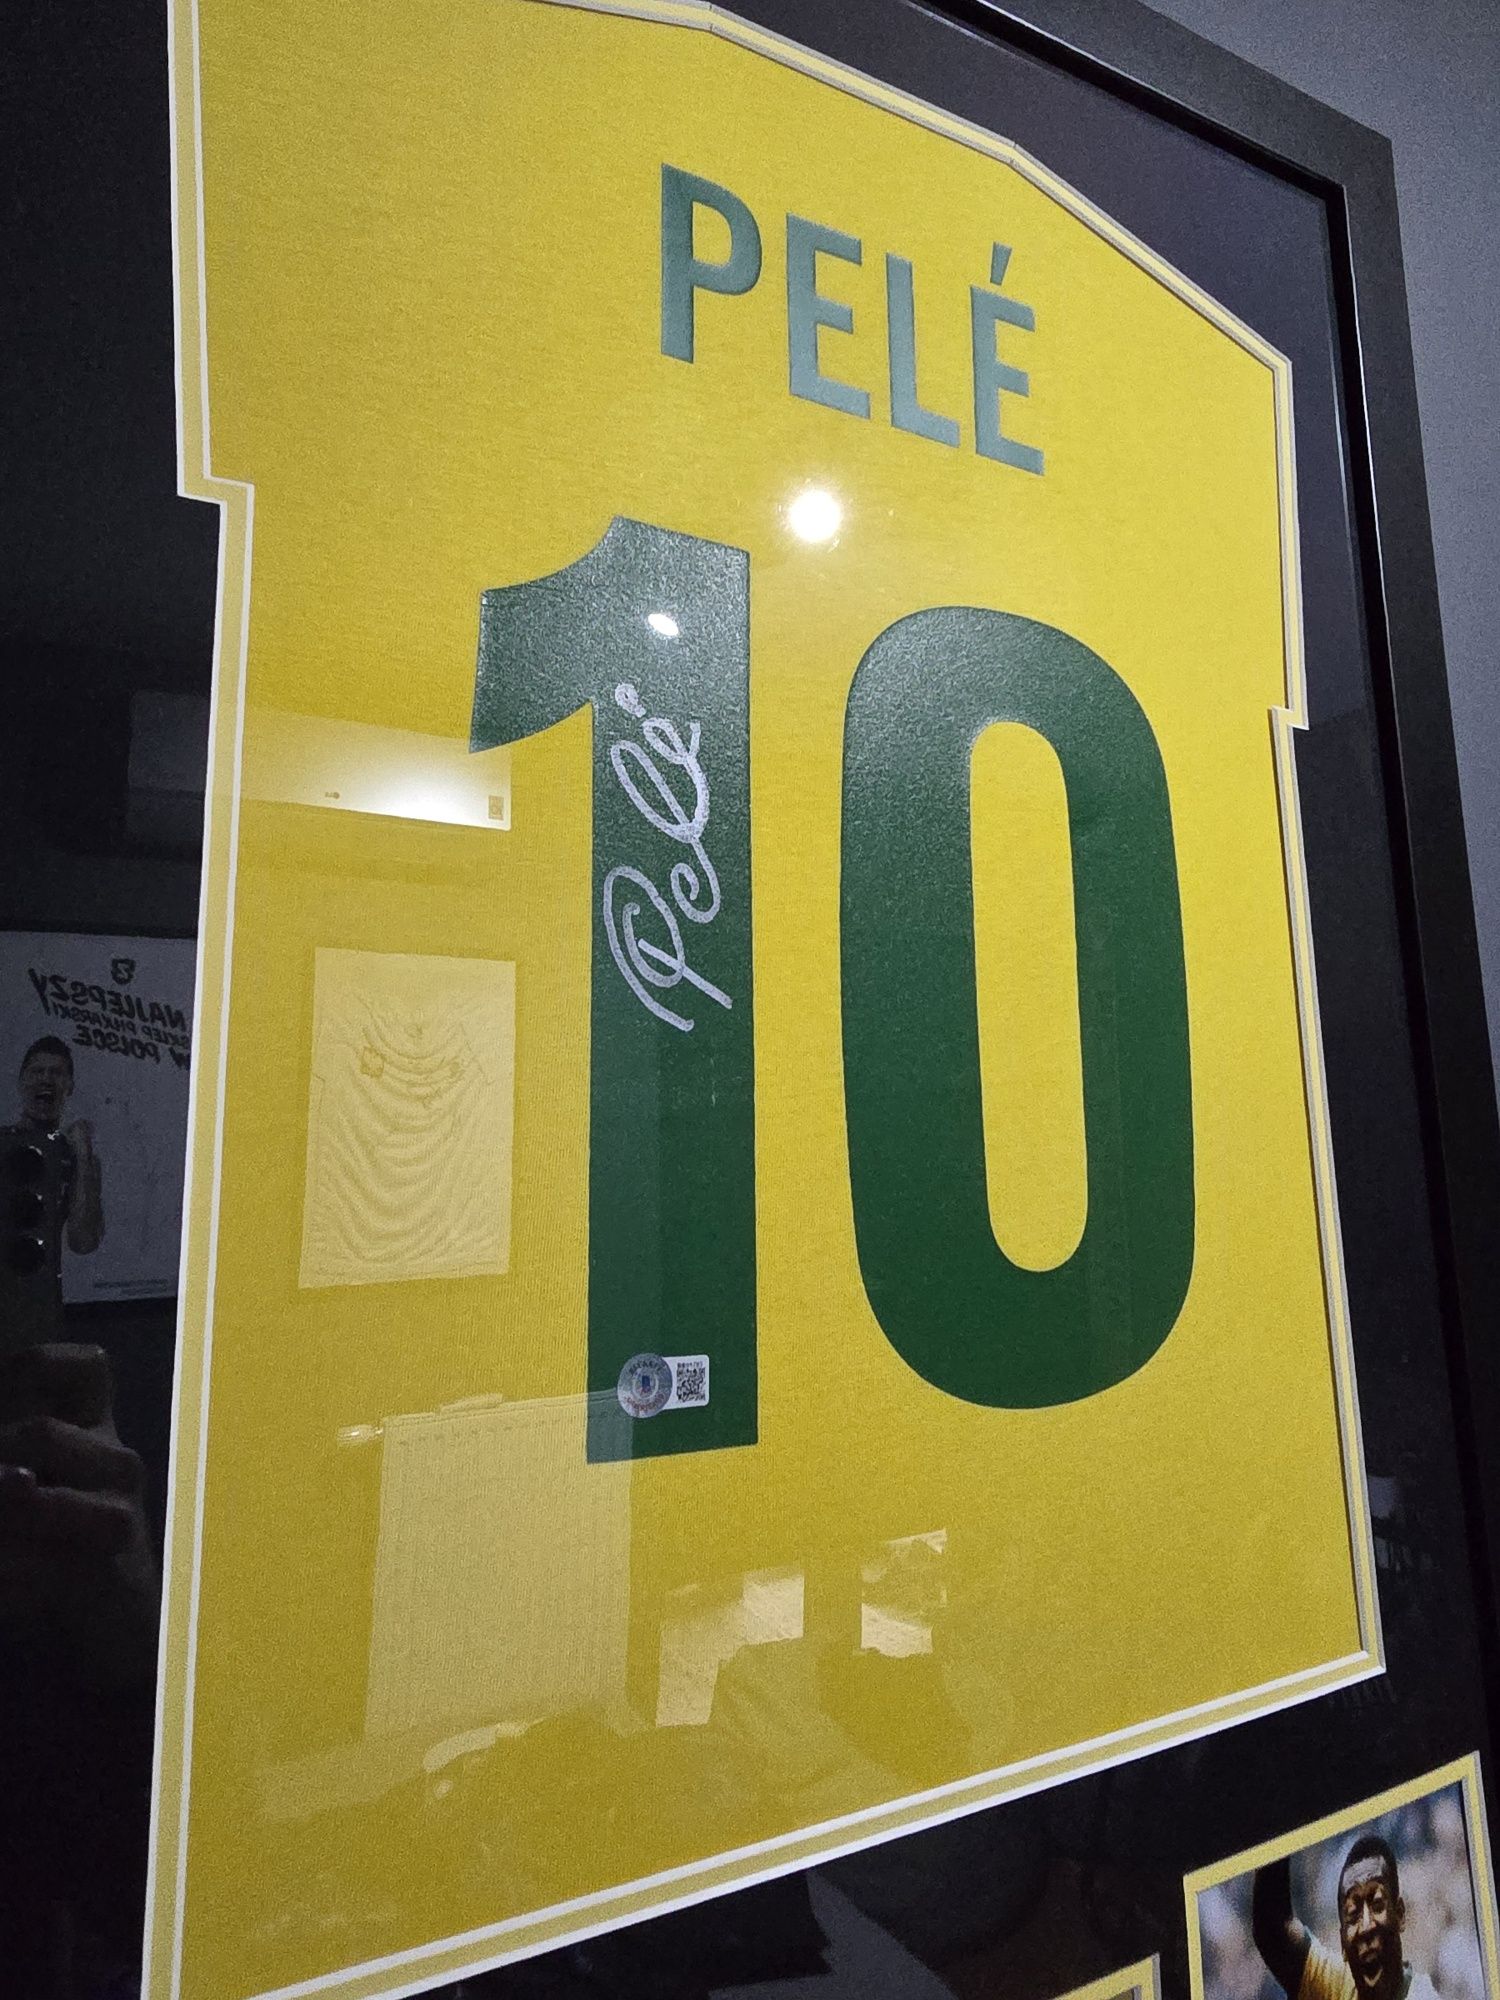 Koszulka z podpisem Pele. Certyfikat